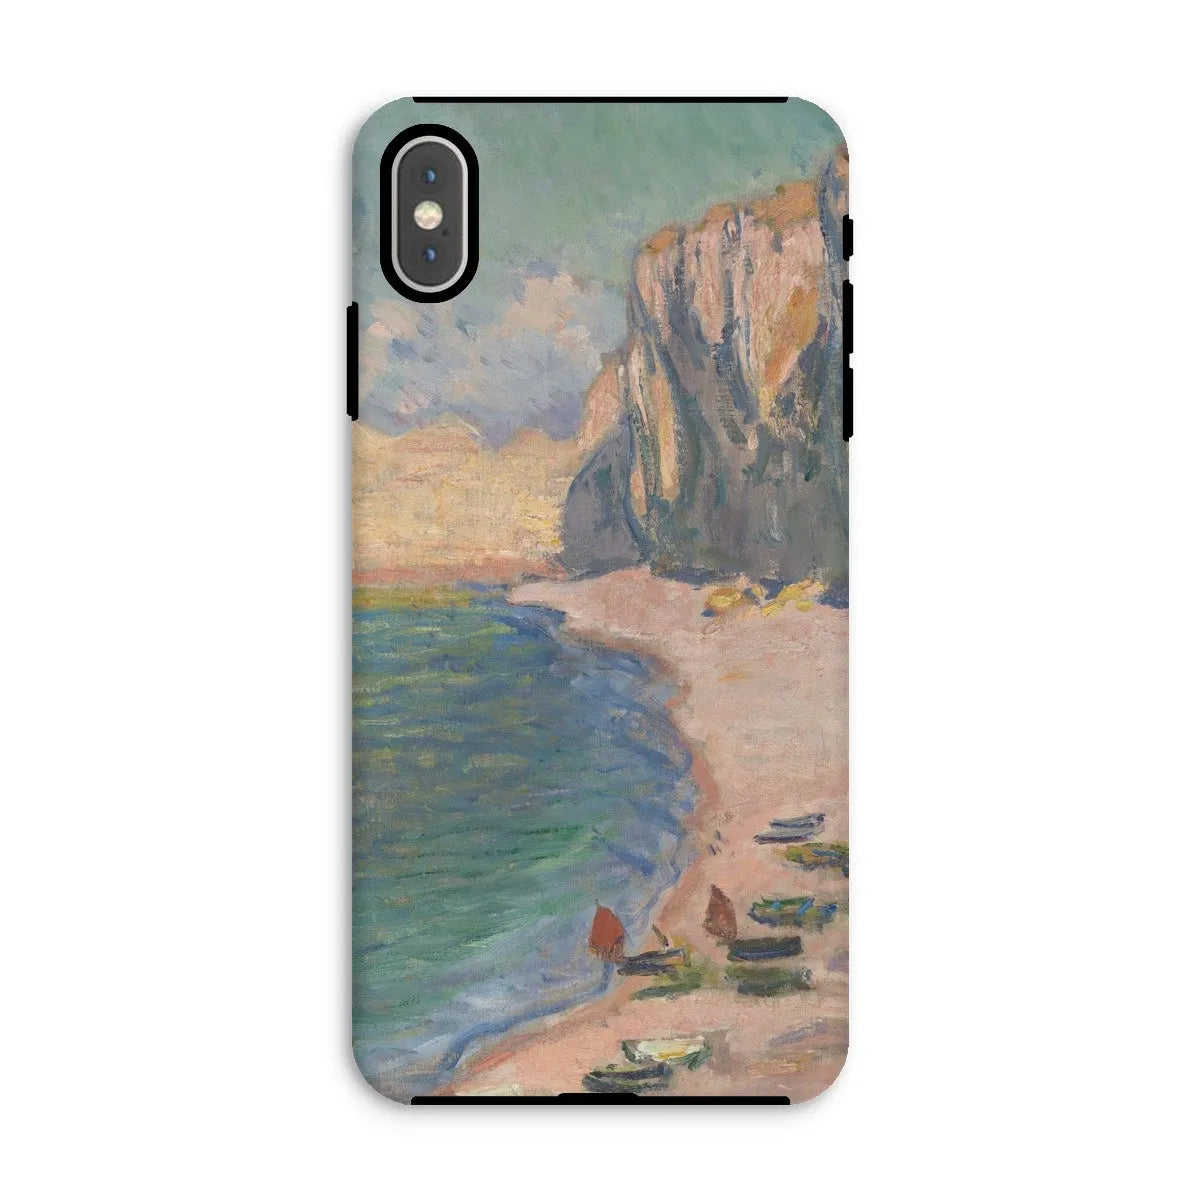 étretat - Impressionist Art Phone Case - Claude Monet - Iphone Xs Max / Matte - Mobile Phone Cases - Aesthetic Art